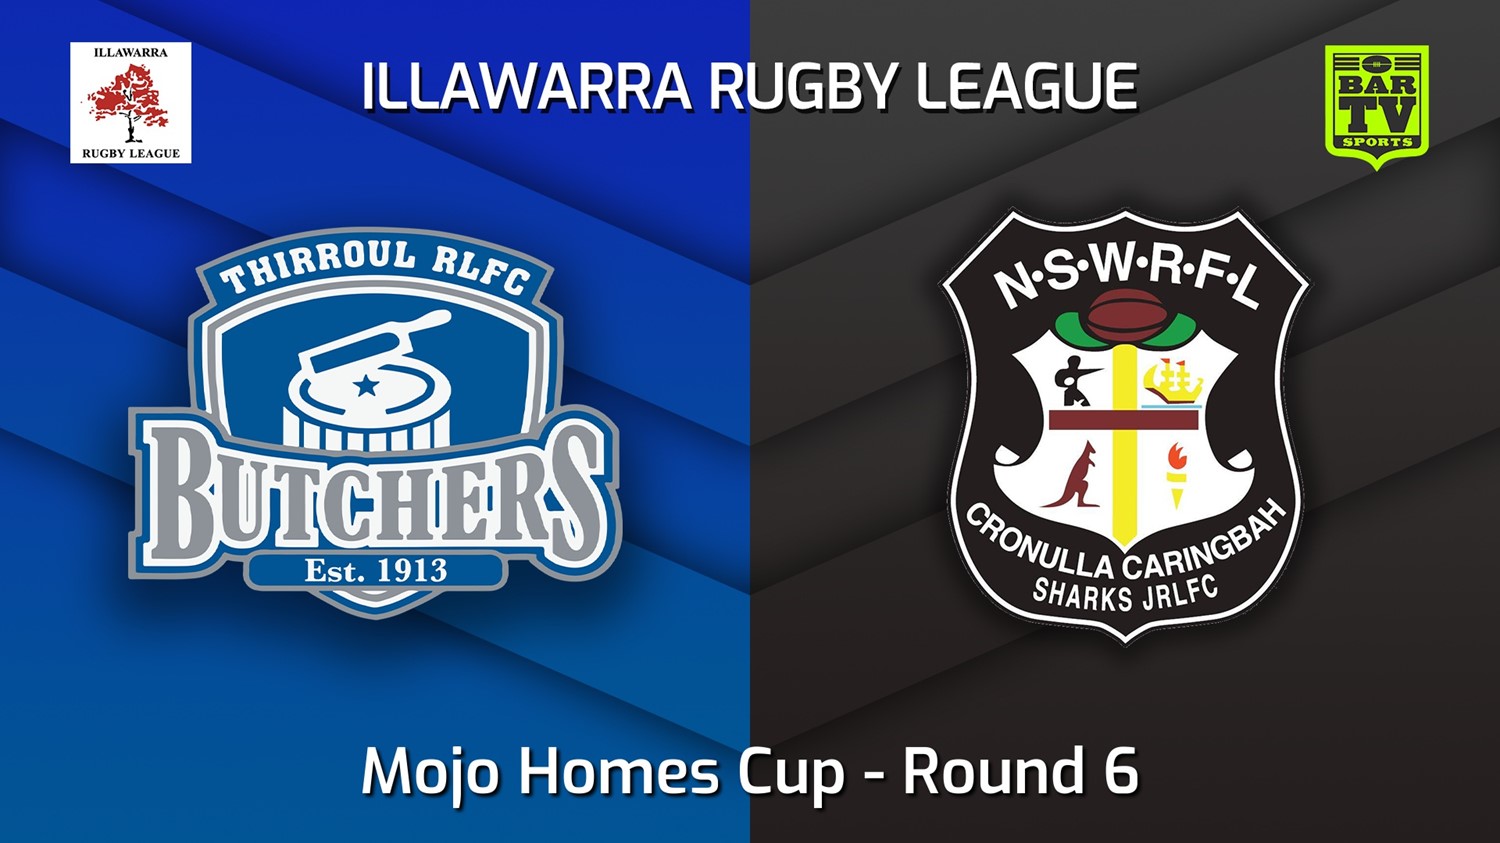 220604-Illawarra Round 6 - Mojo Homes Cup - Thirroul Butchers v Cronulla Caringbah Slate Image